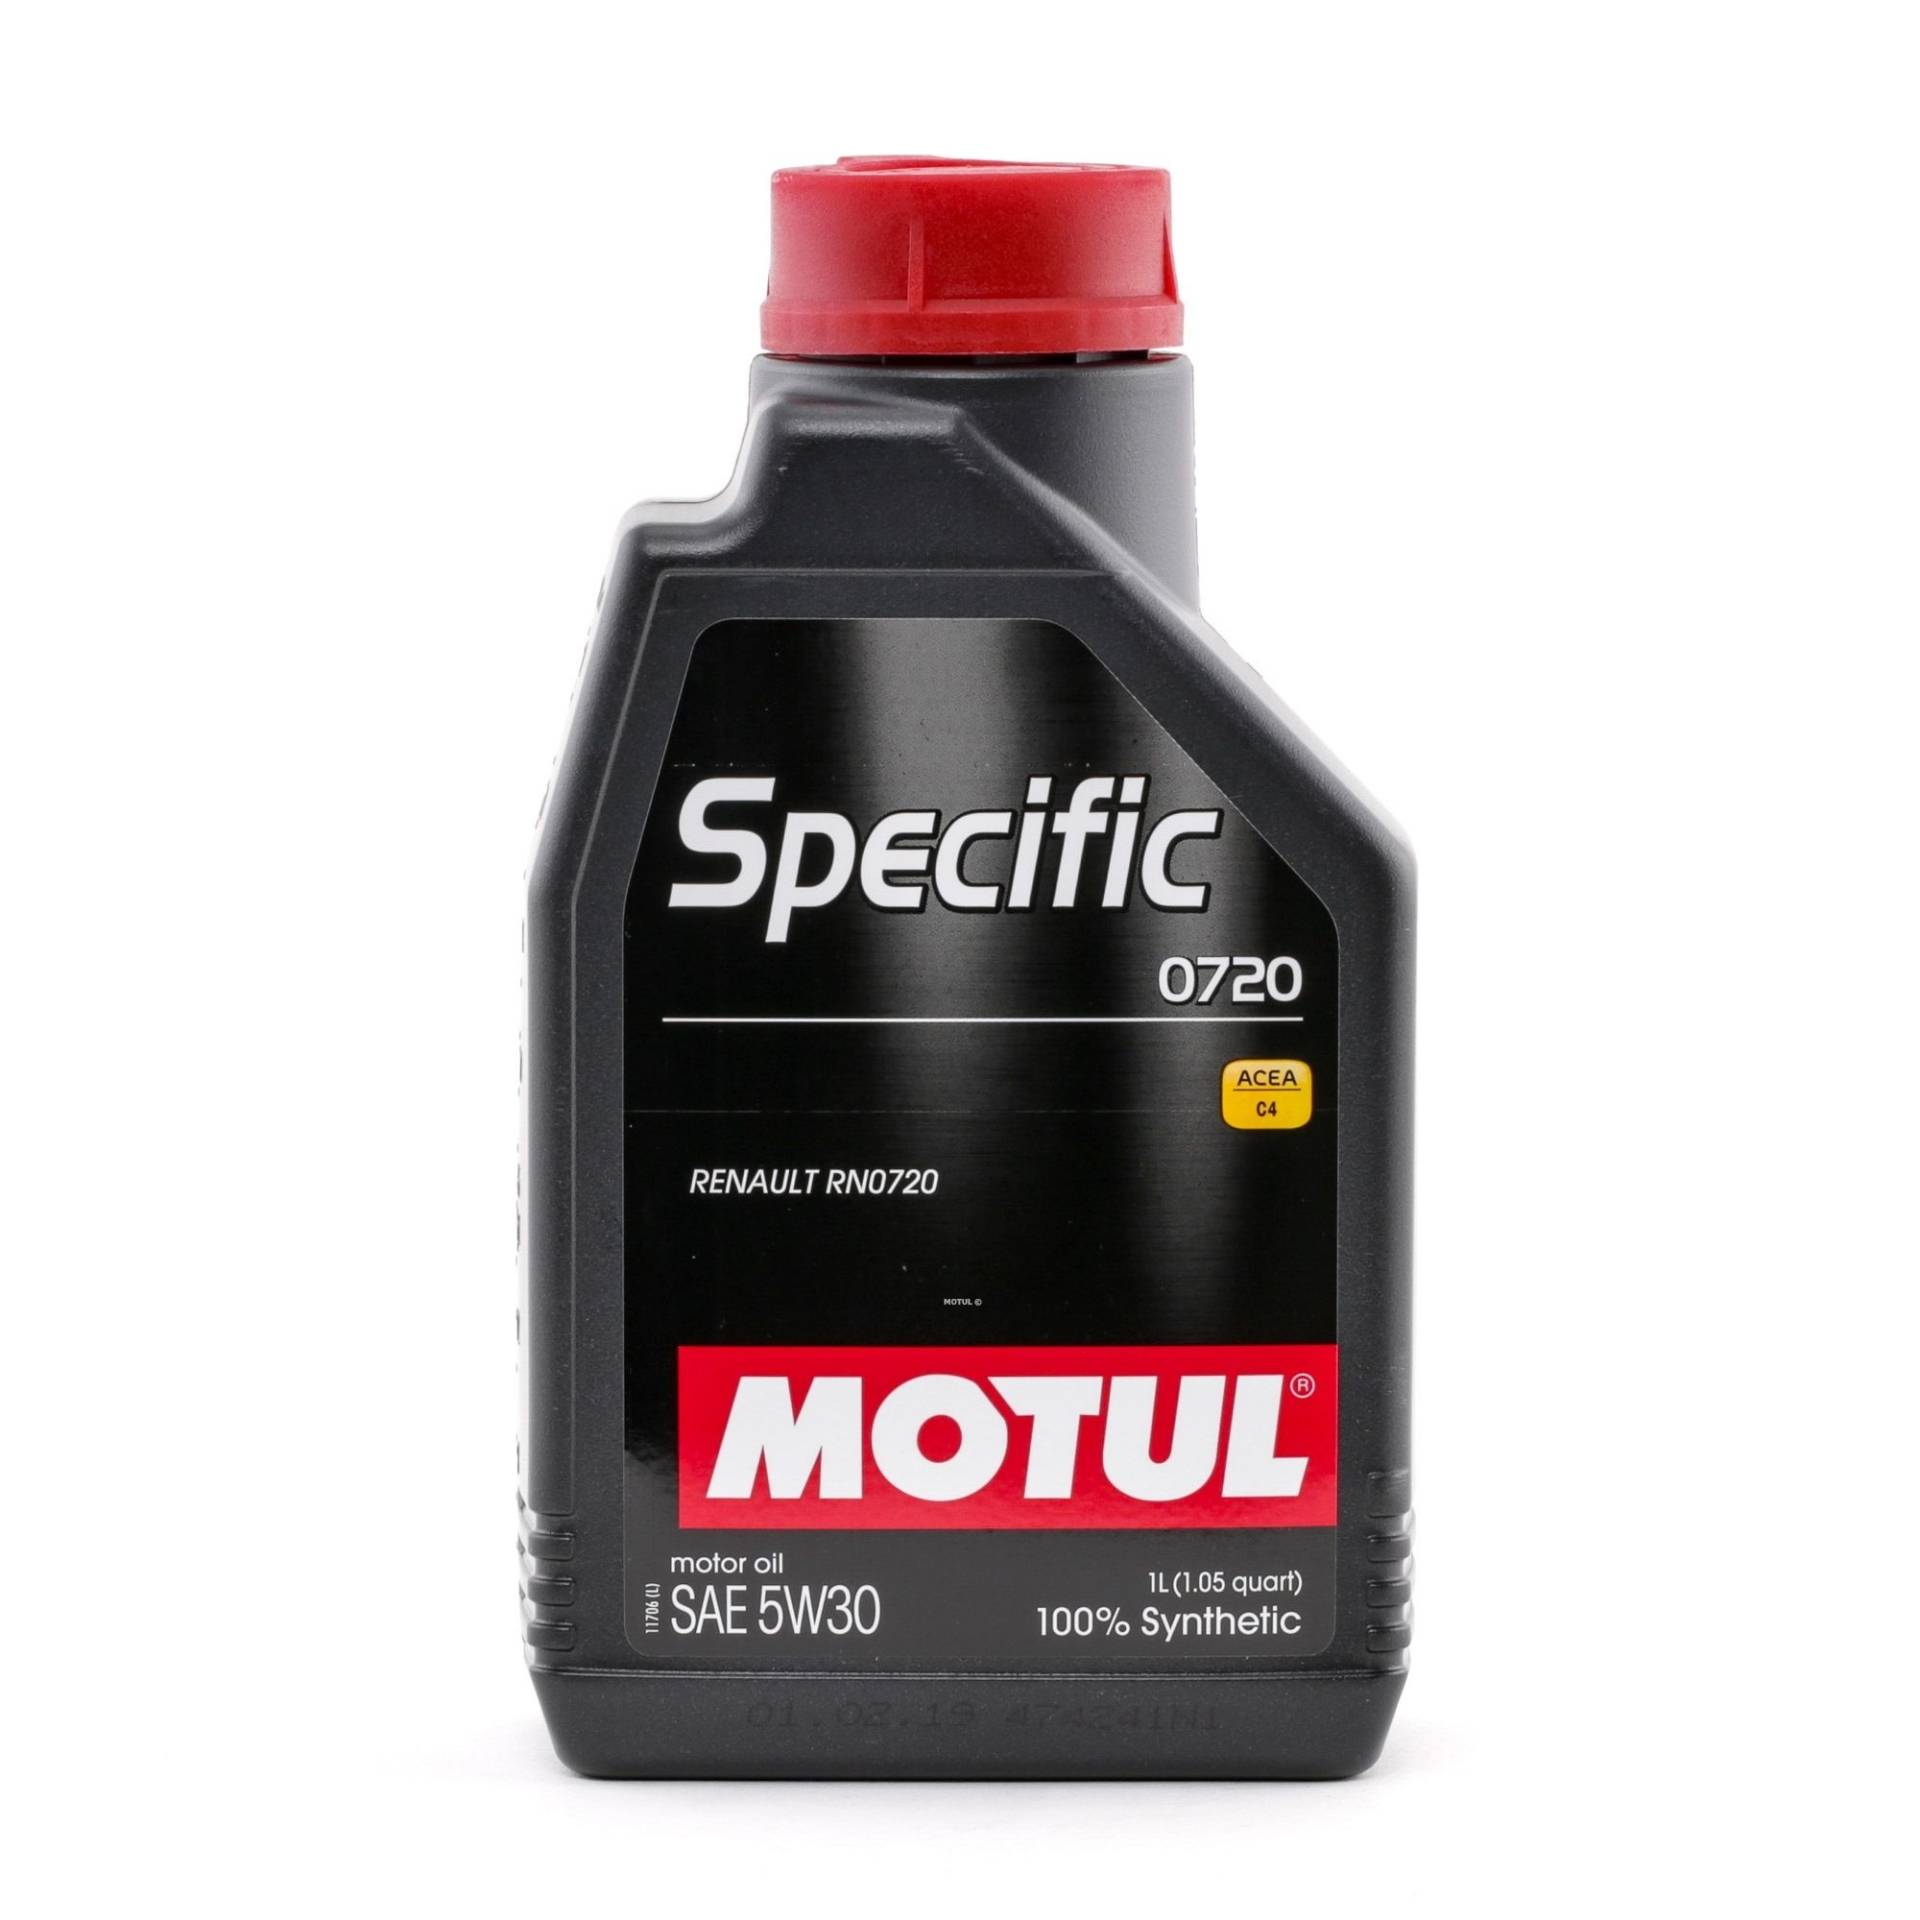 MOTUL Motoröl MERCEDES-BENZ,RENAULT,FIAT 102208 Motorenöl,Öl,Öl für Motor von MOTUL